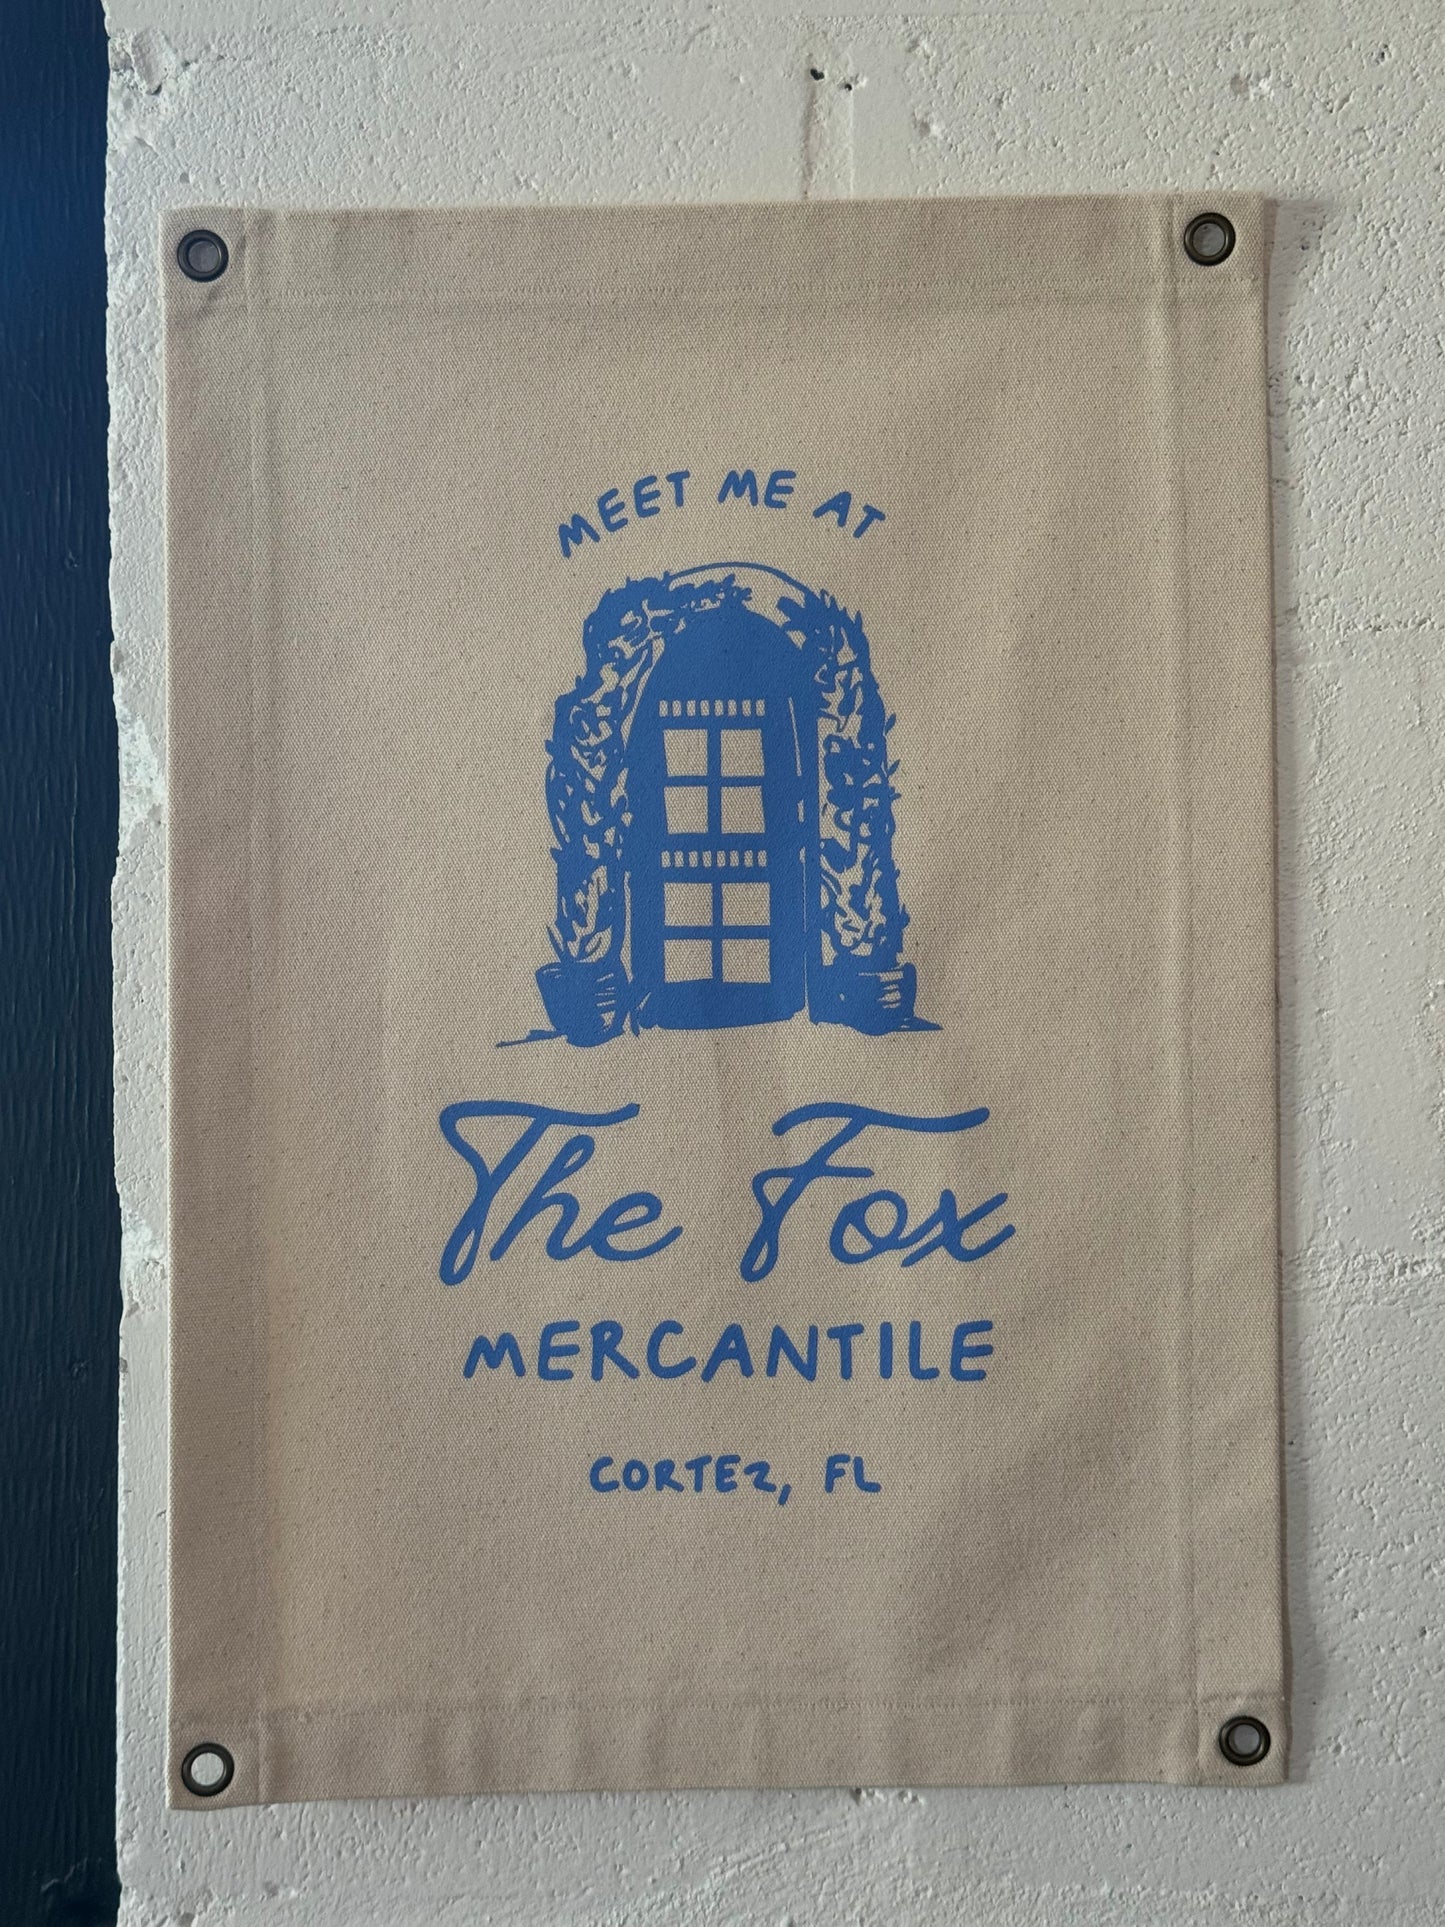 "Meet Me at the Fox M." Canvas Banner